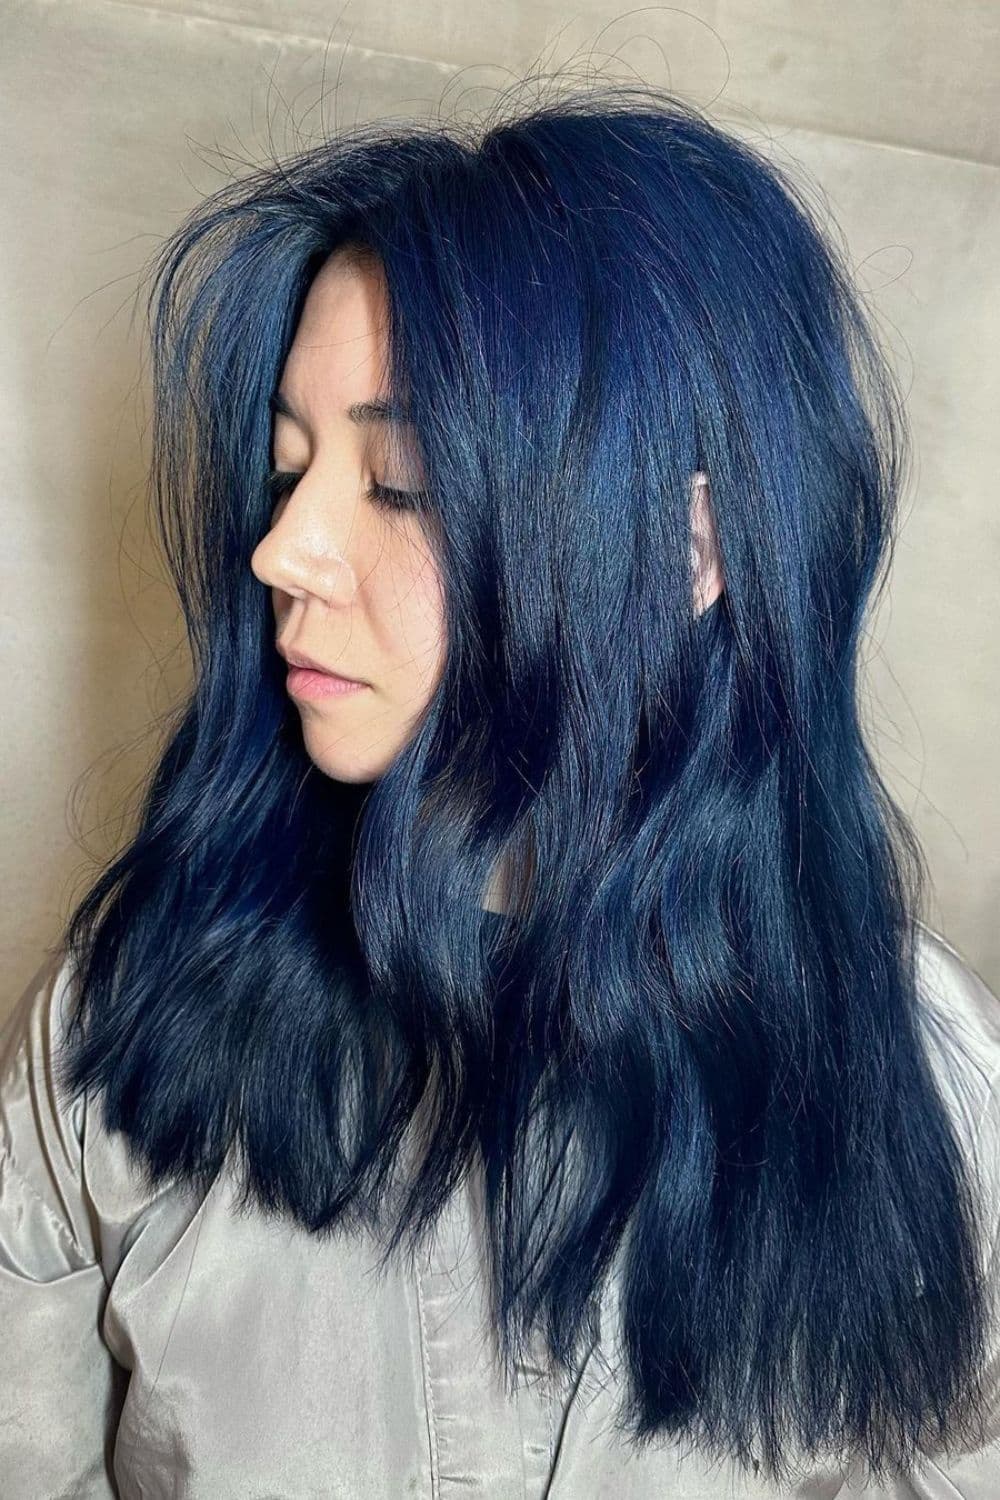 A woman with medium length wavy blue black hair.